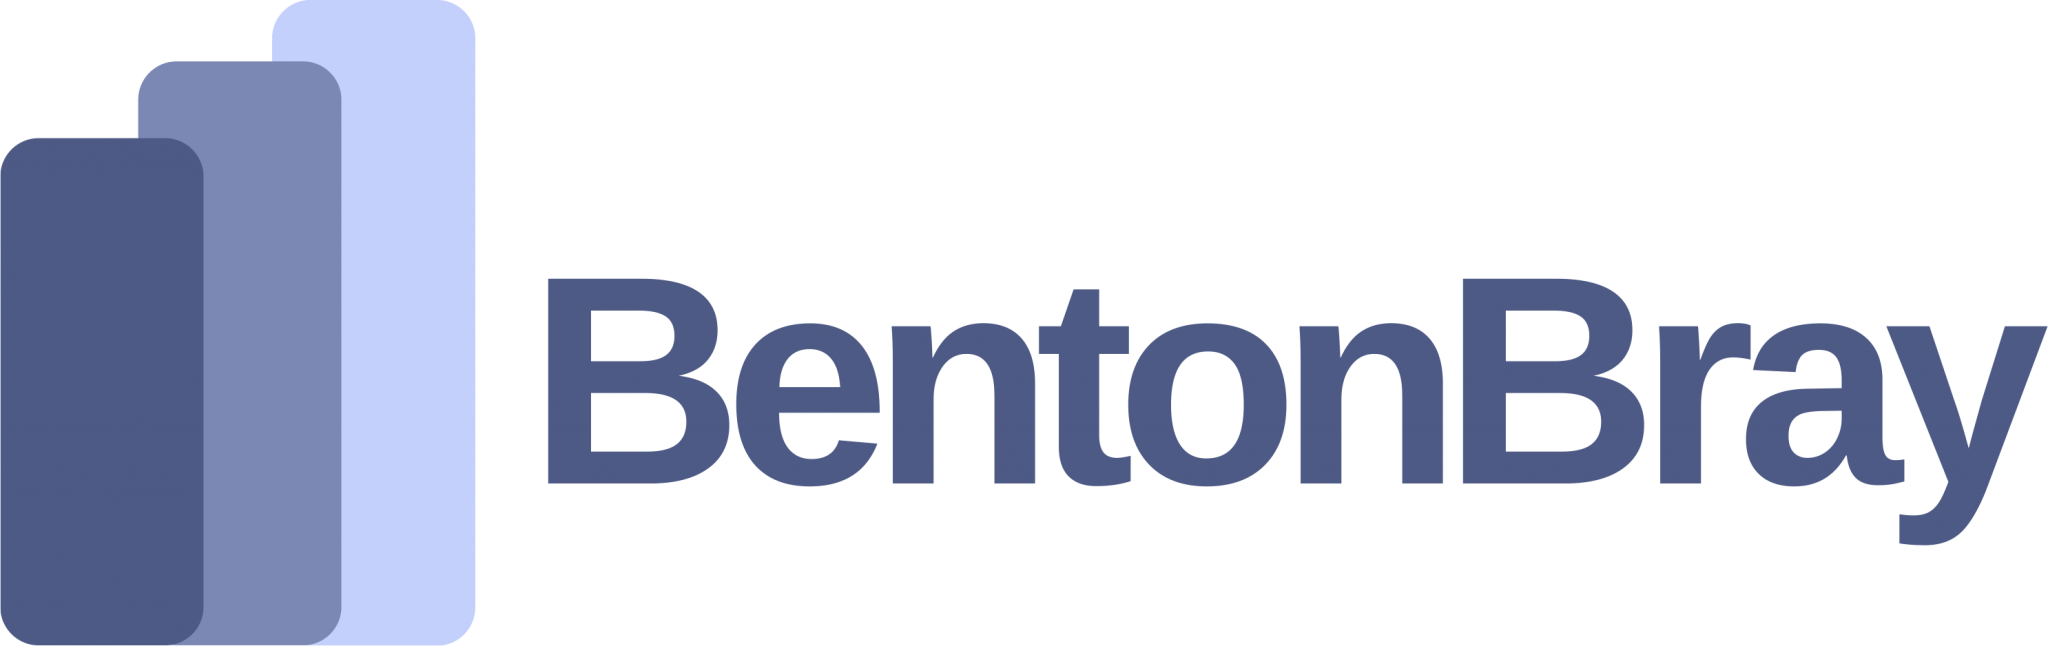 Gpg Bentonbray Logo Transparent Web